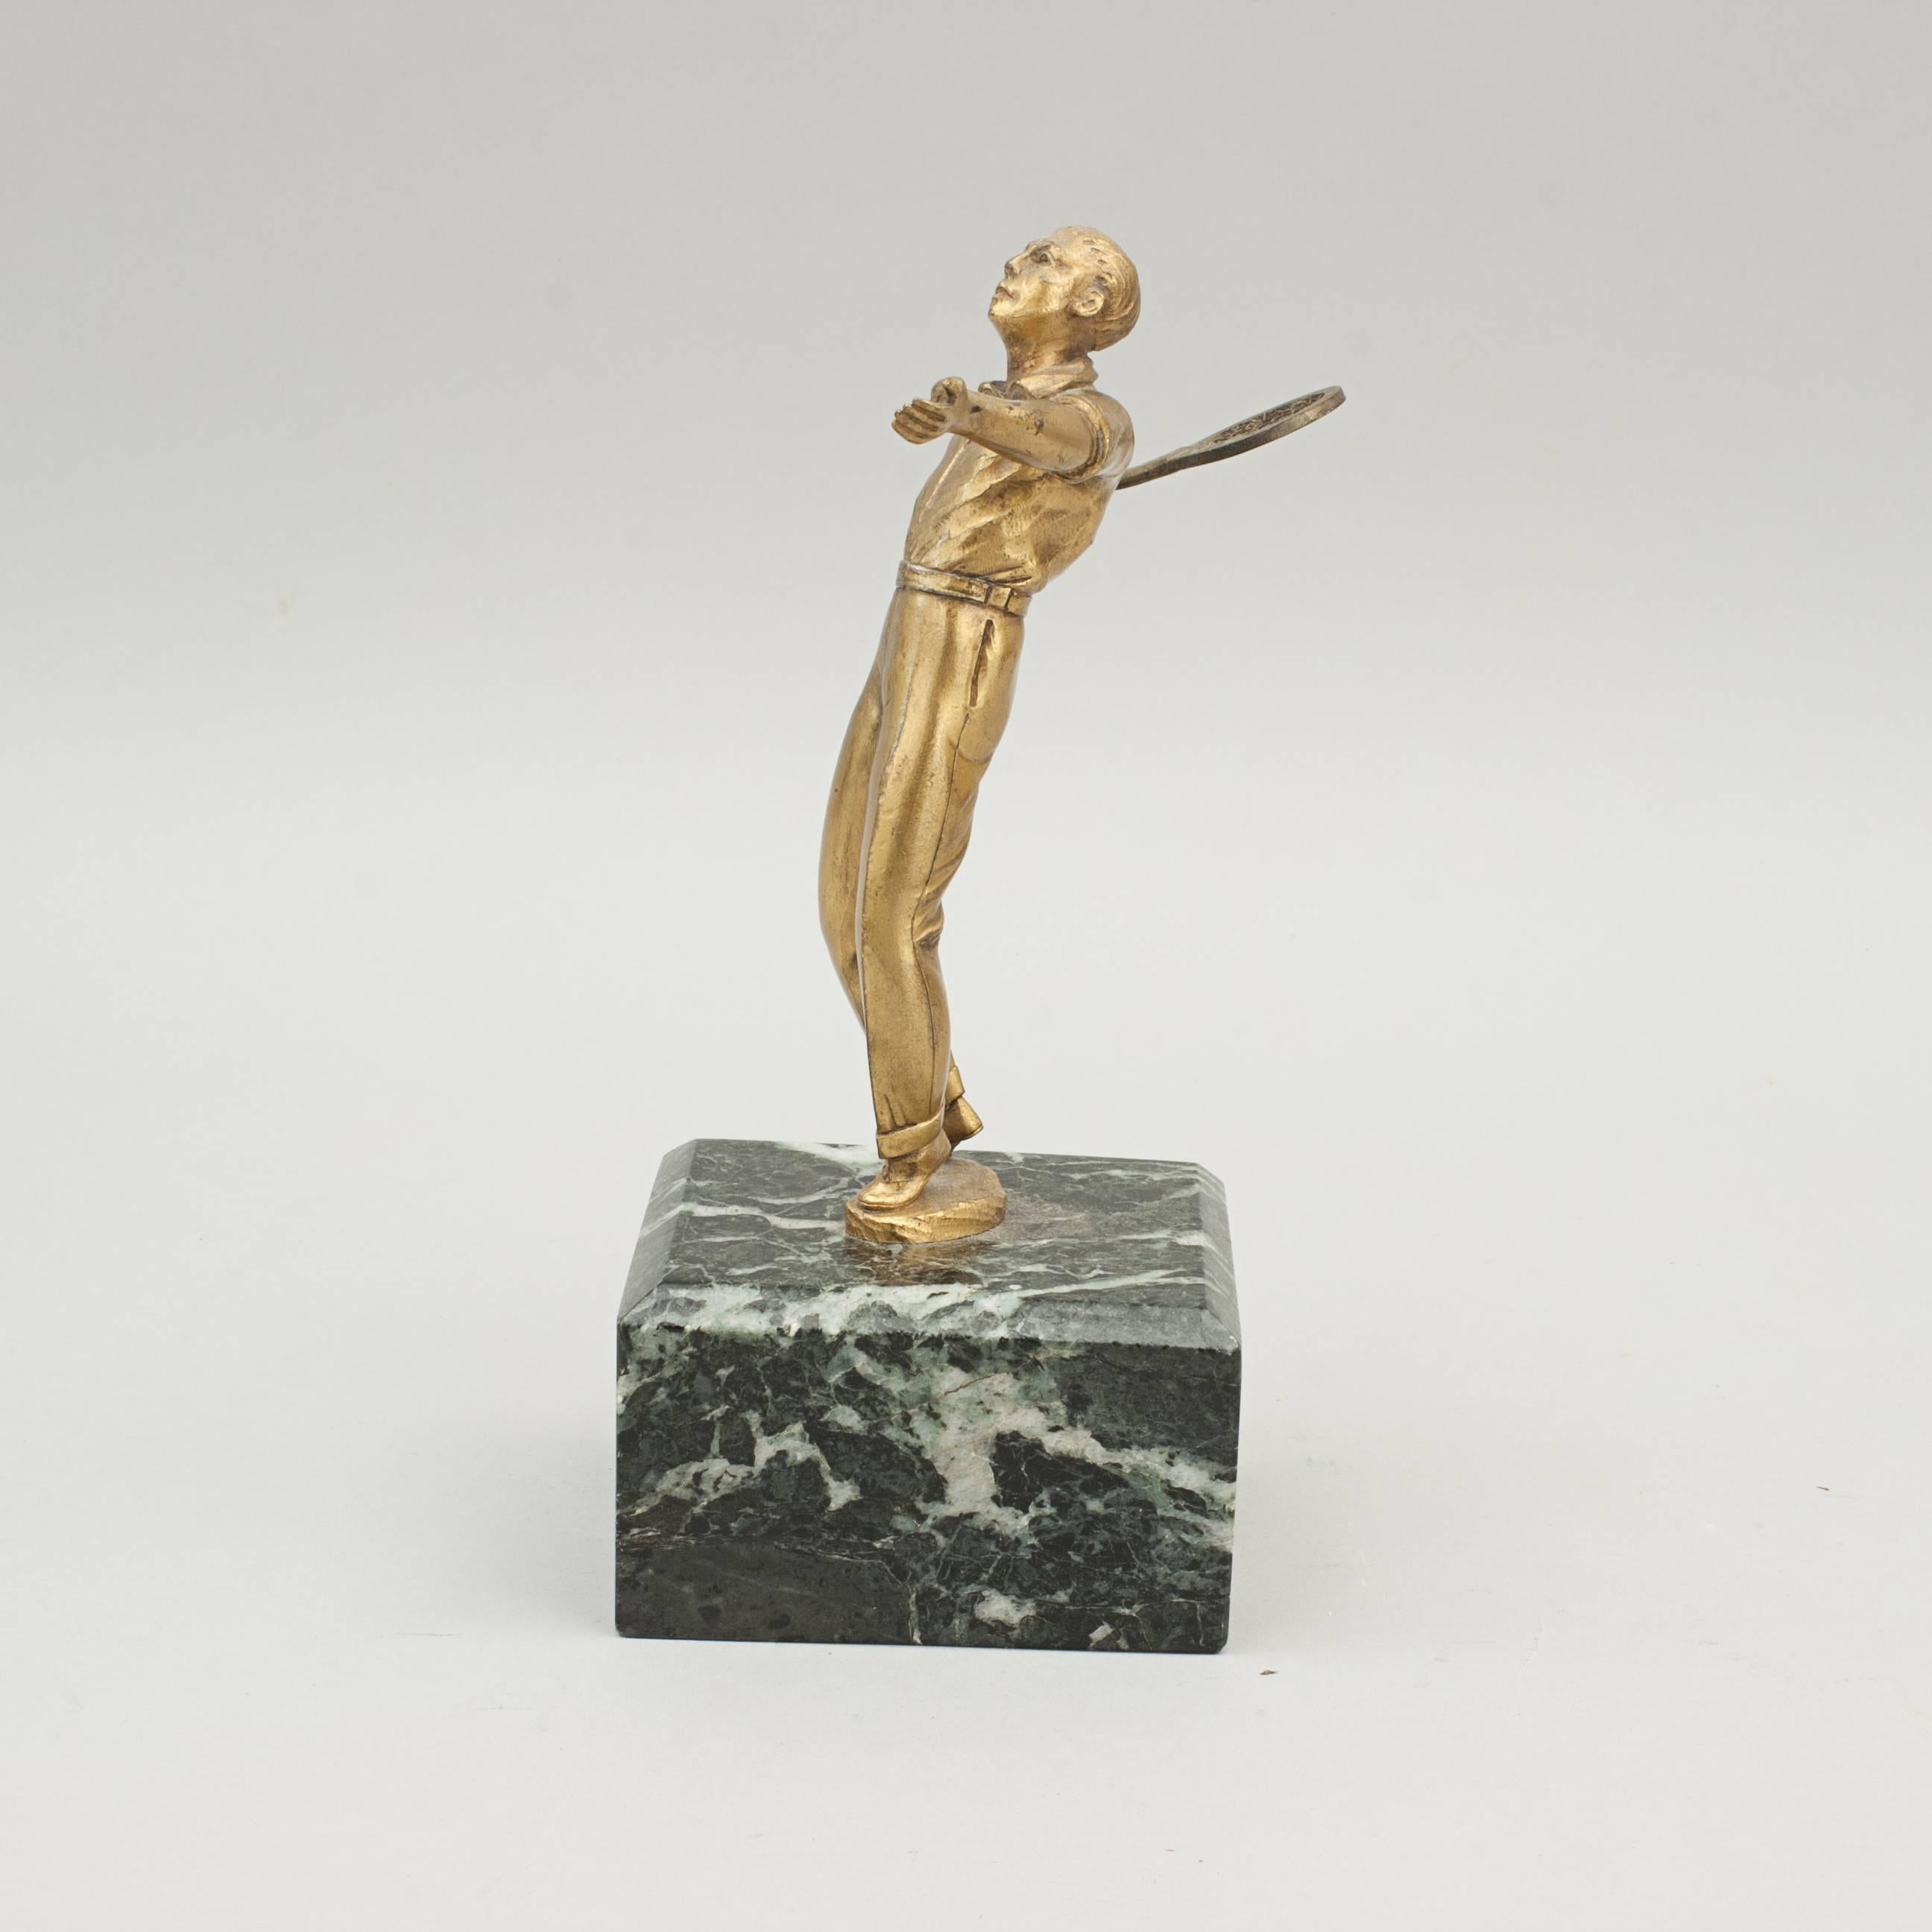 European Vintage Tennis Figure, Statue in Brass on Plinth